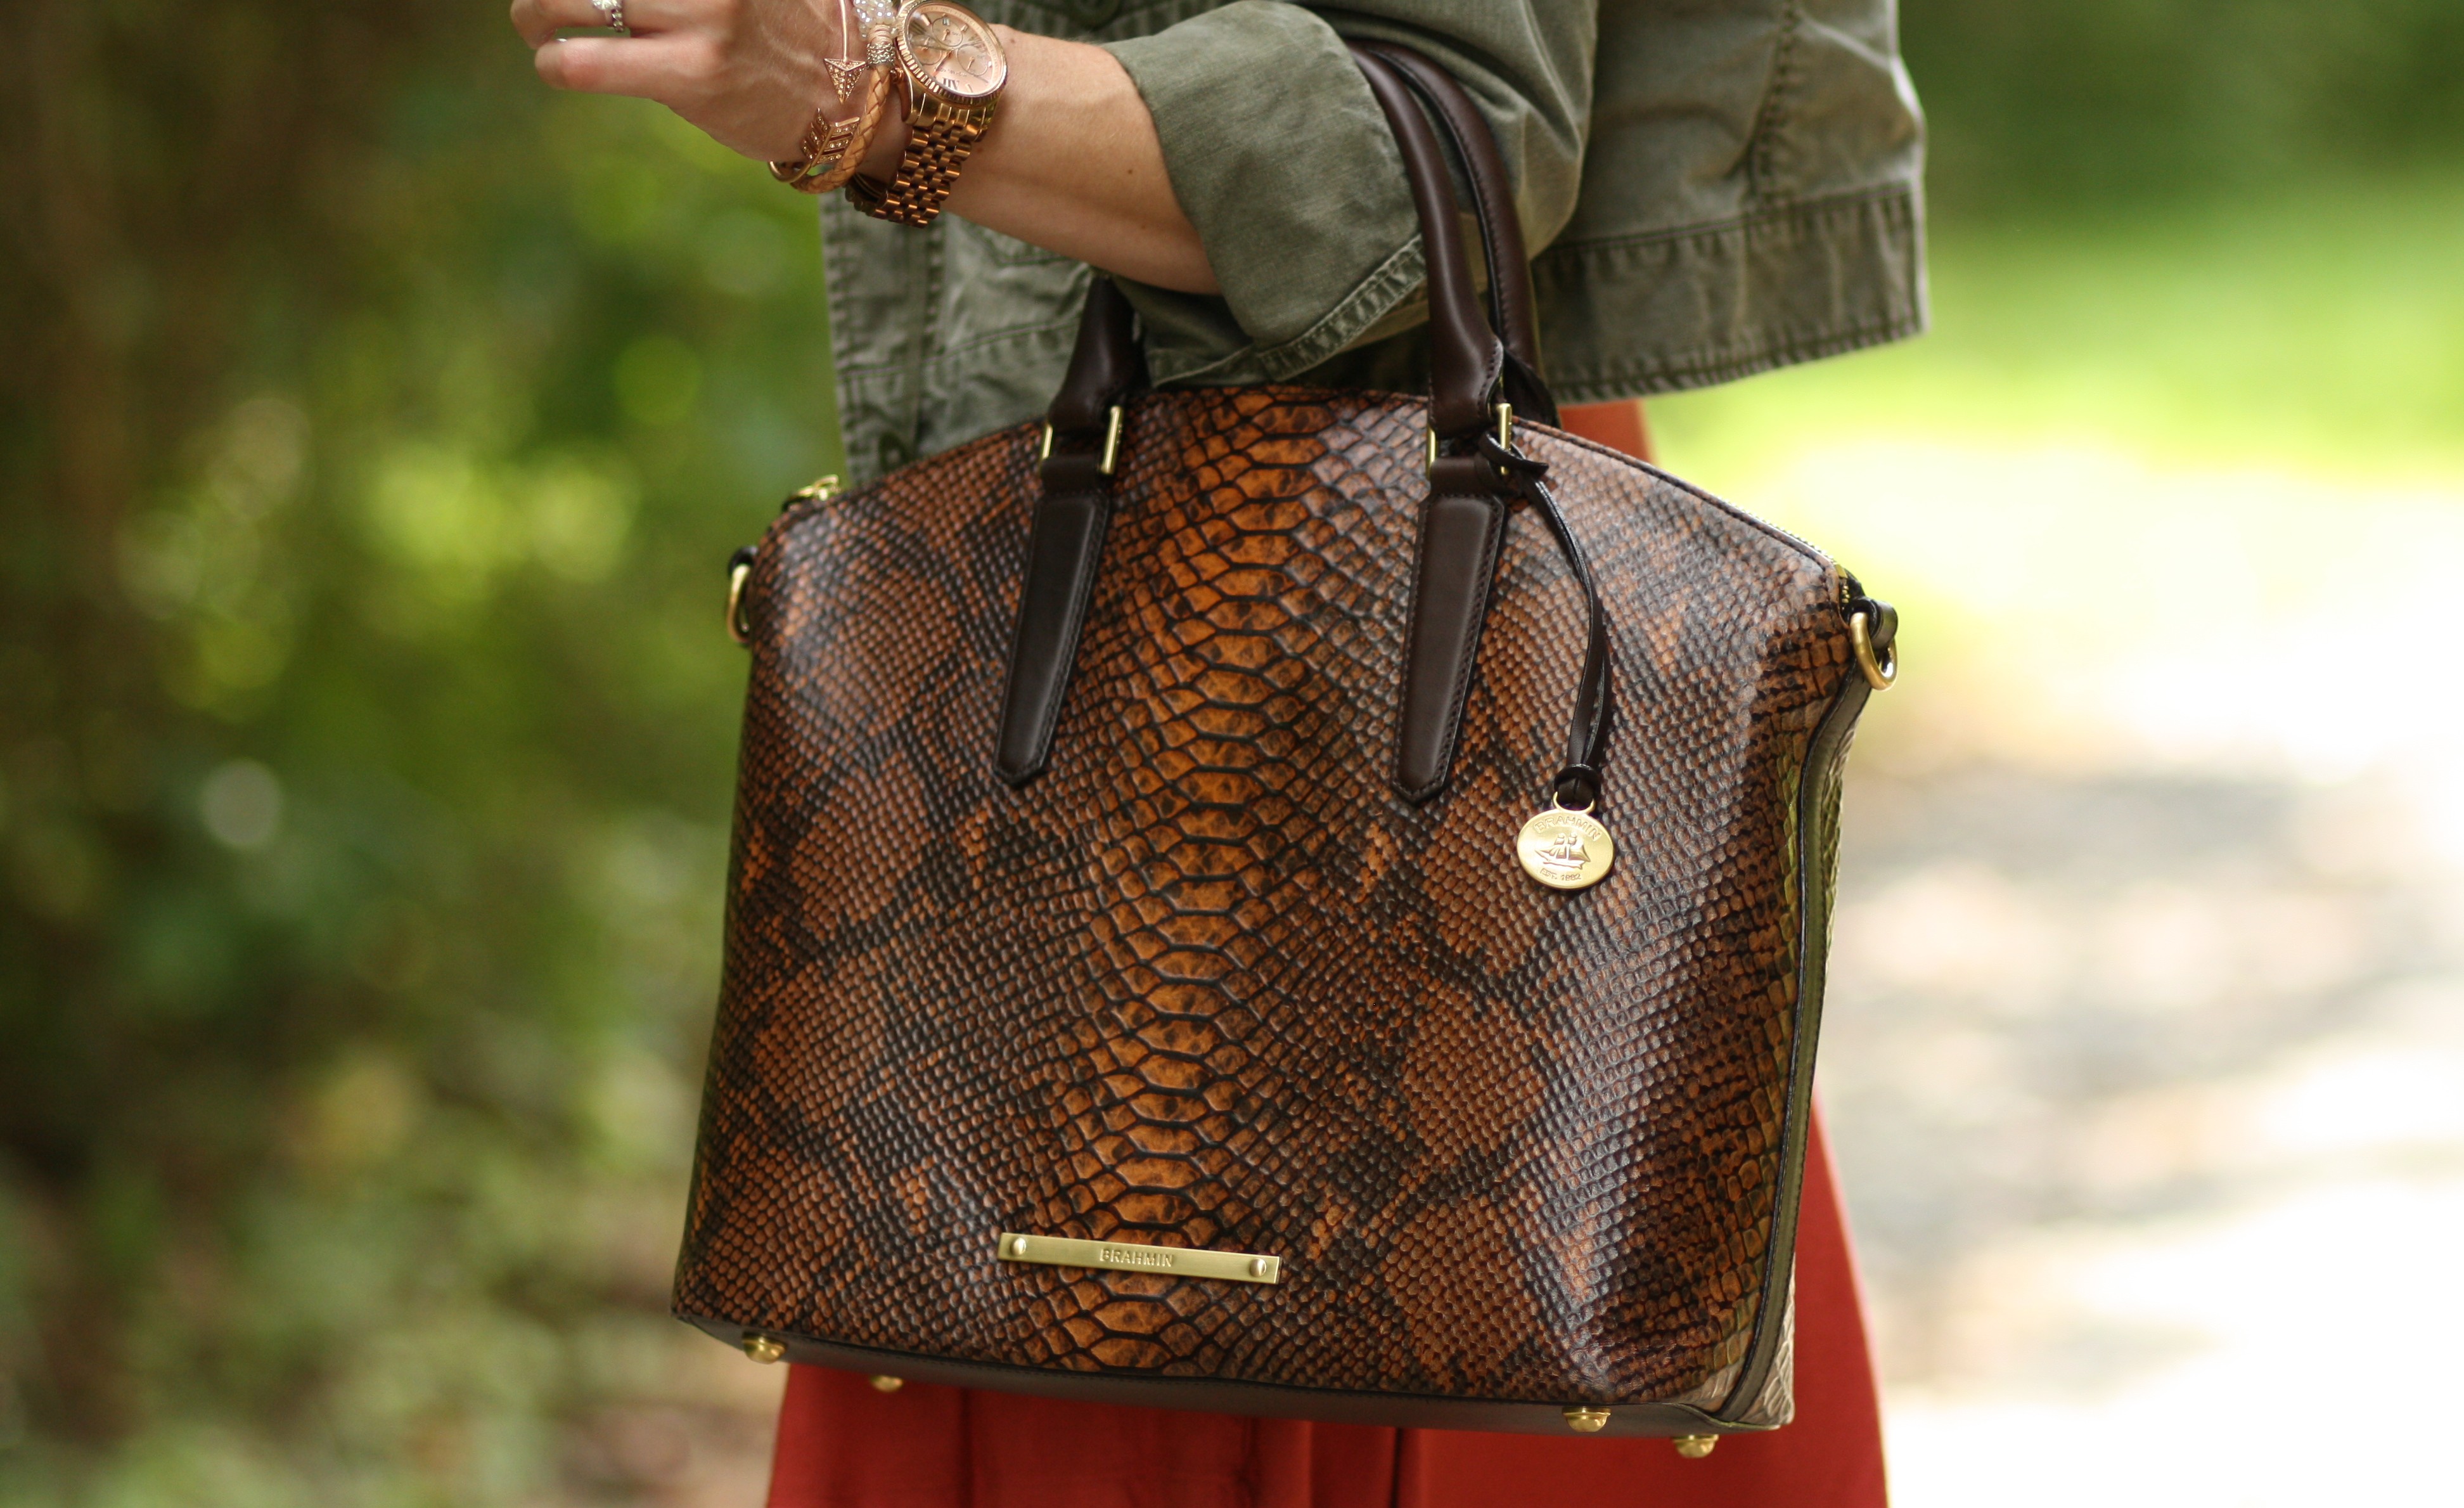 1990s Brahmin Brown Leather Handbag Tortoise Lucite Handle